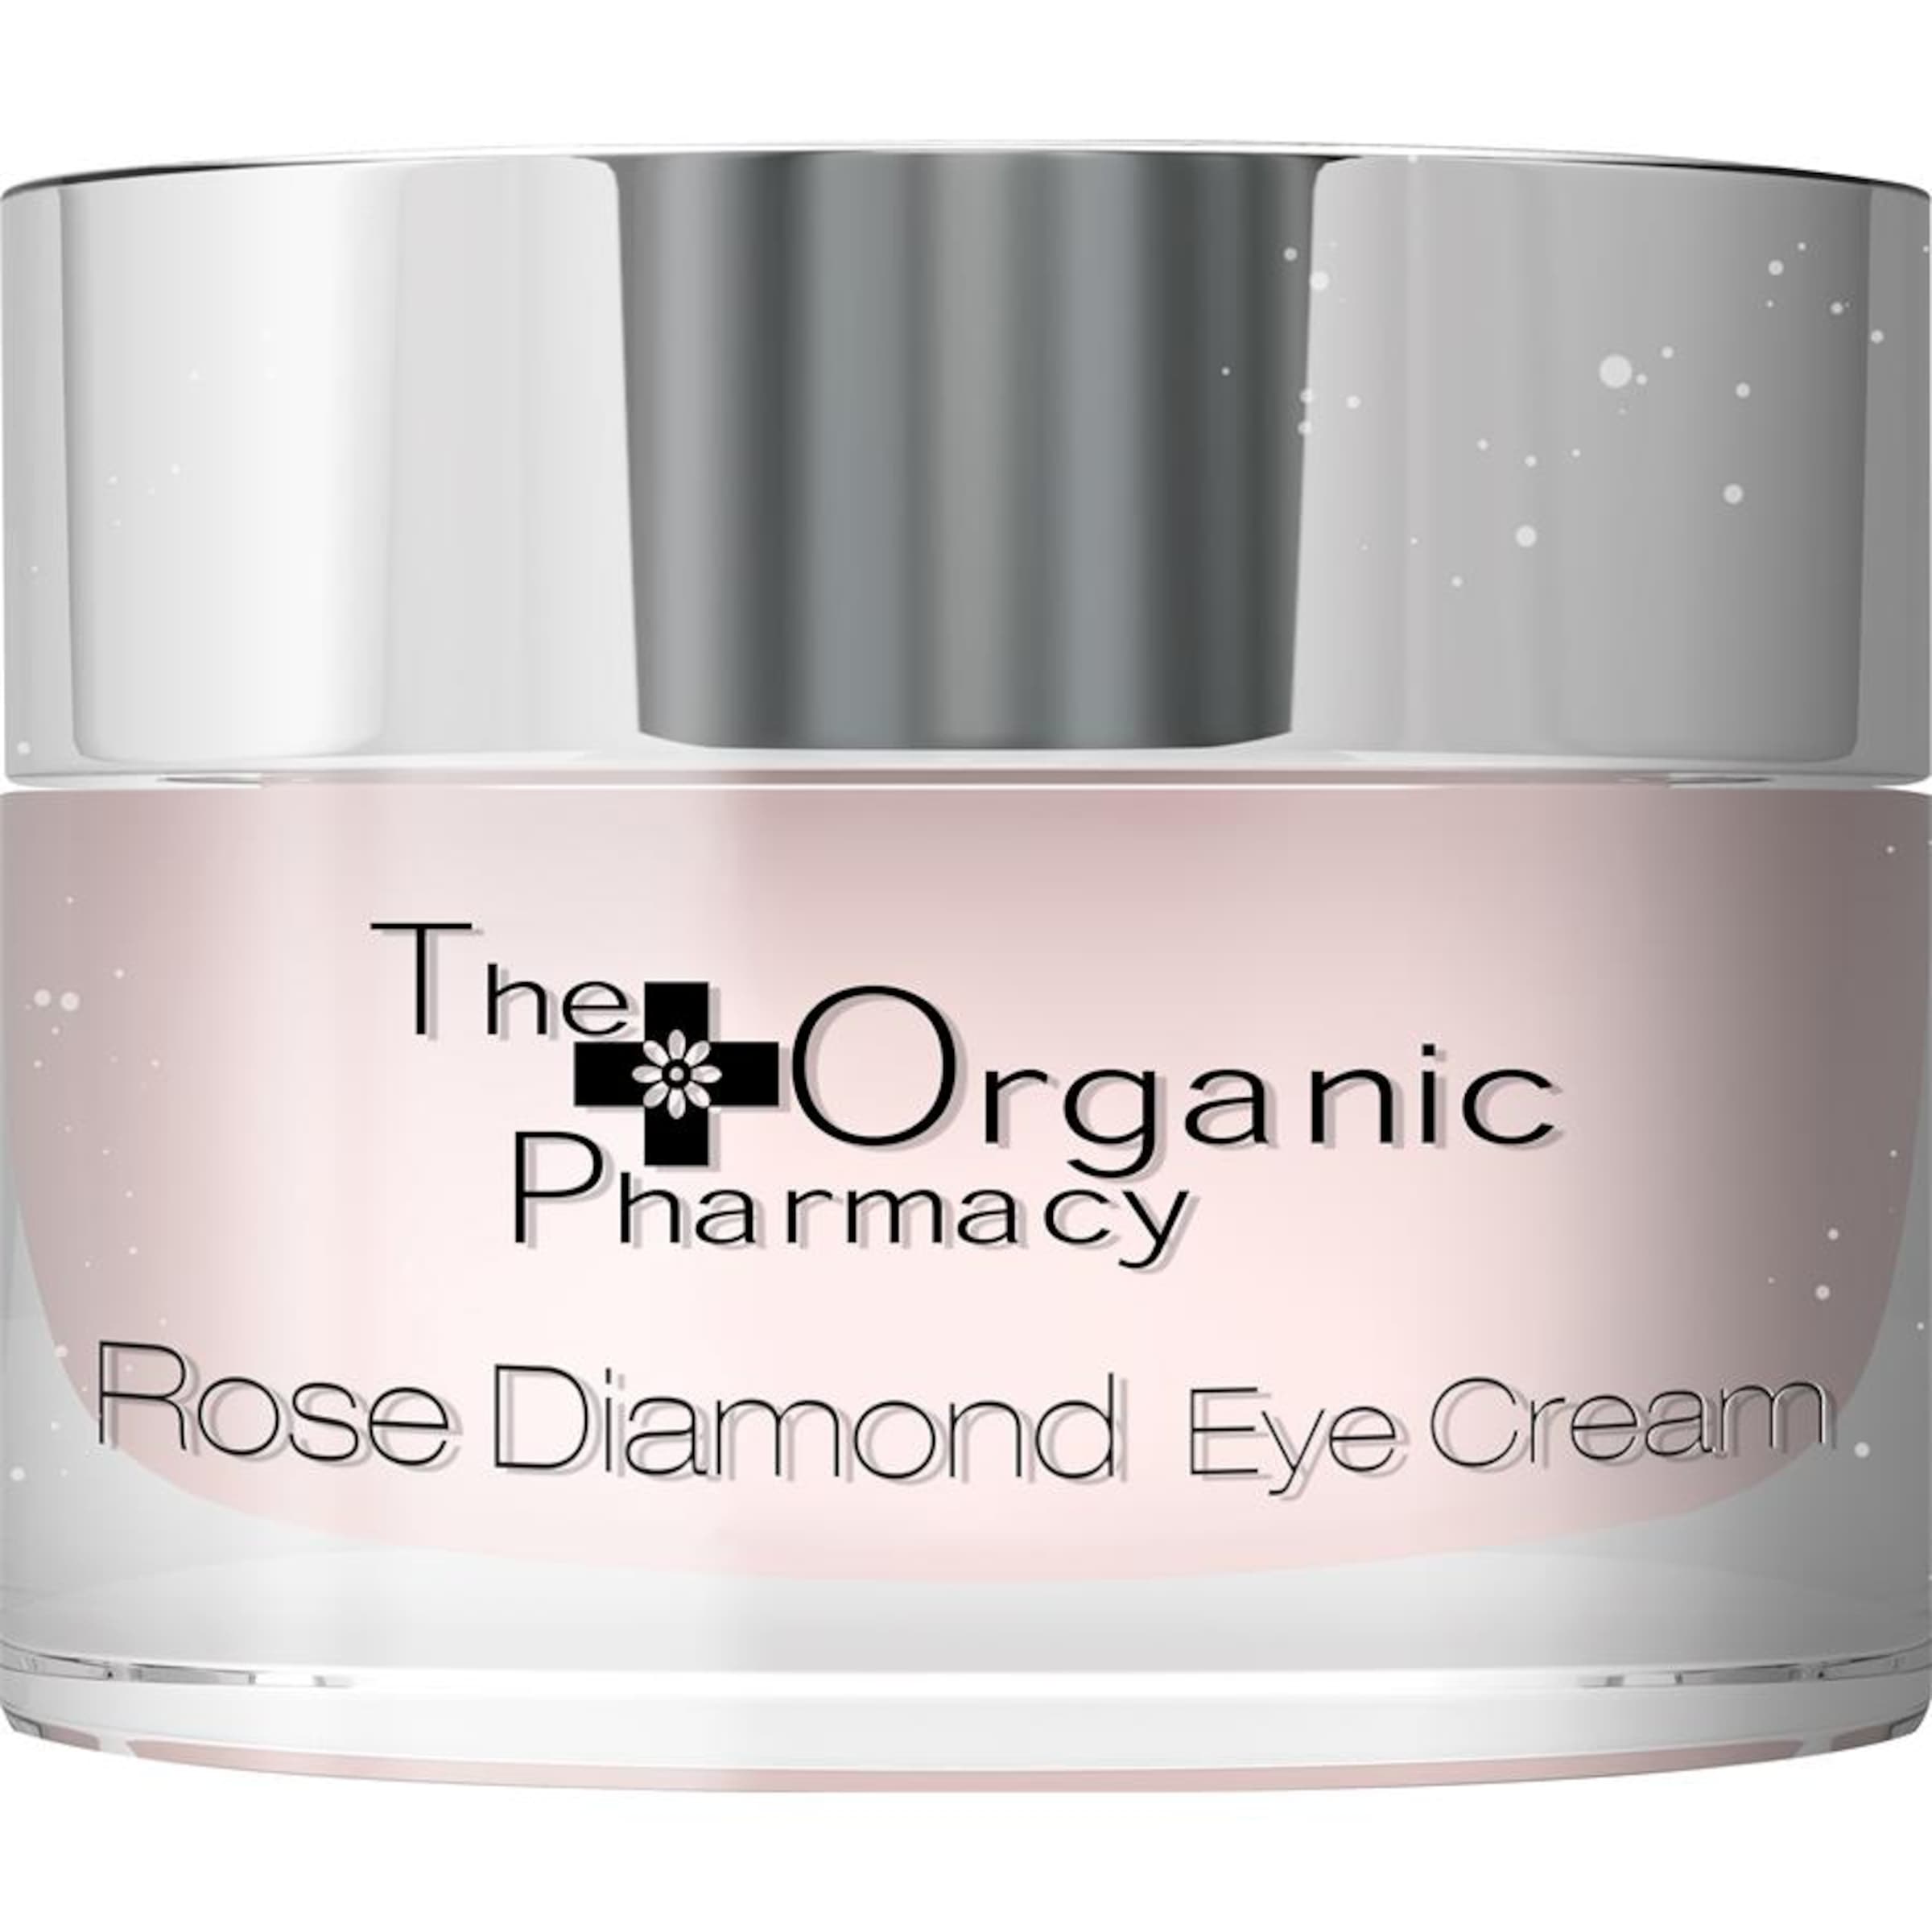 The Organic Pharmacy Rose Diamond Eye Cream in 